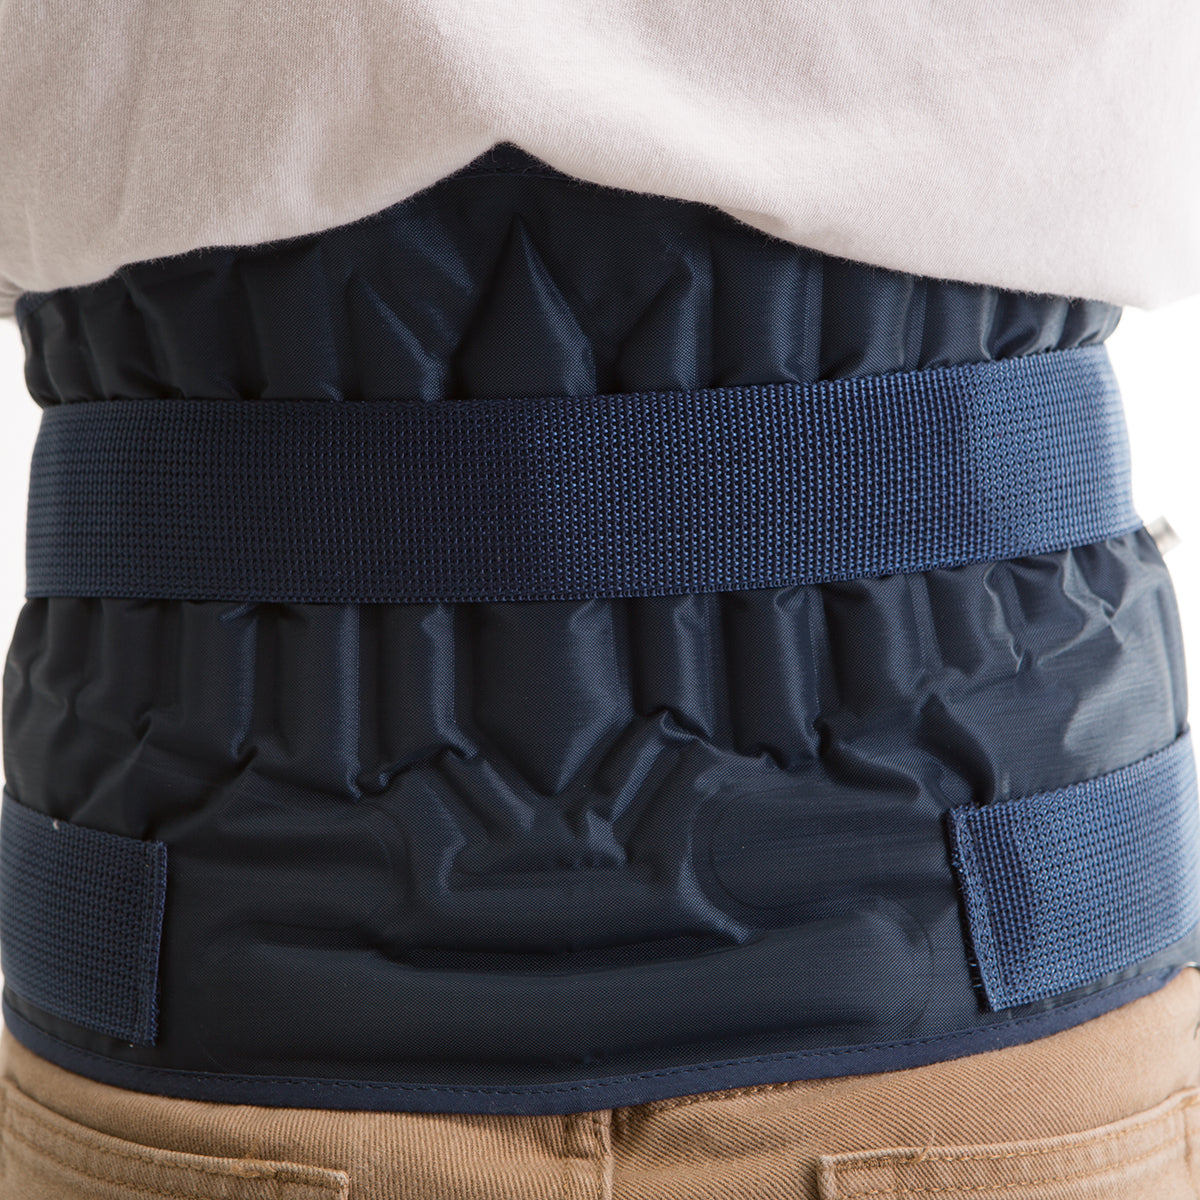 Lumbo Sacral Belt, Comfortable Back Support